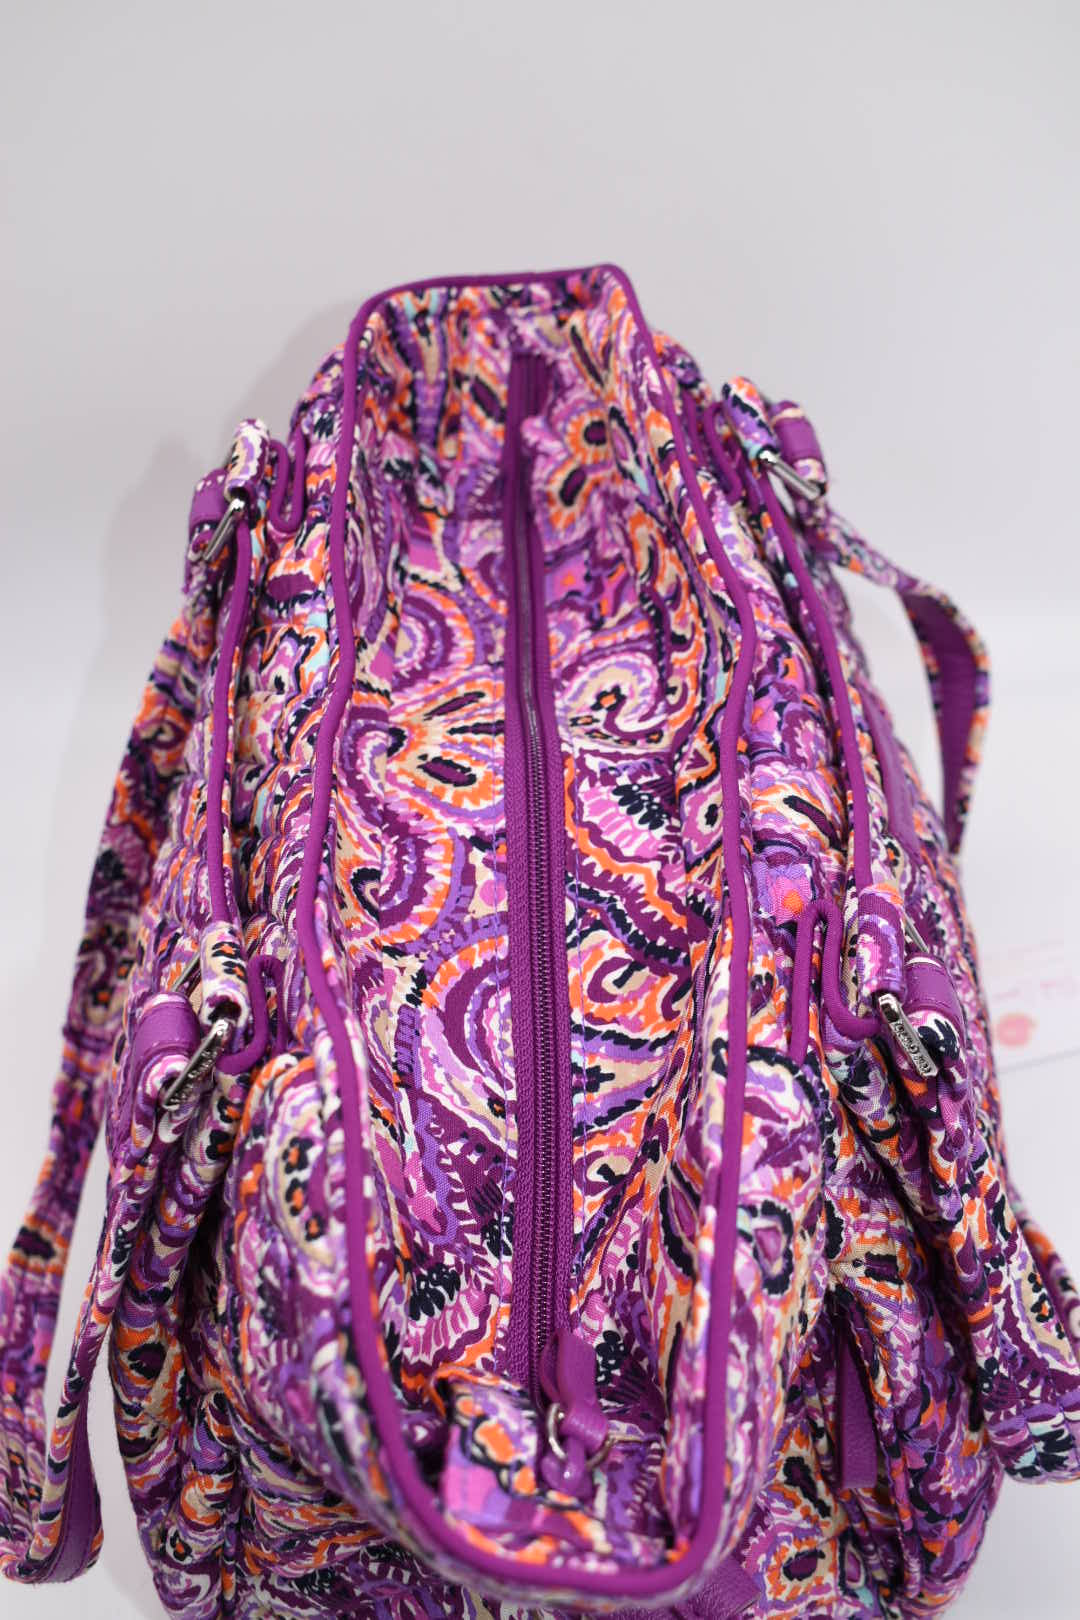 Vera Bradley Glenna Satchel Bag in "Dream Tapestry" Pattern